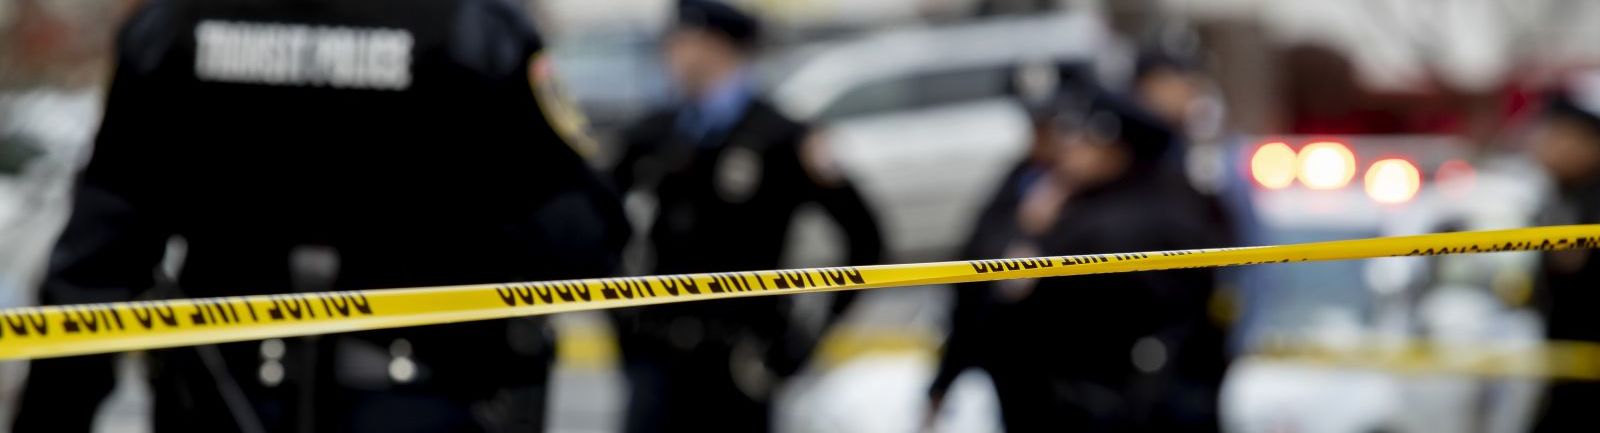 Police cordon off a crime scene using yellow "police tape."